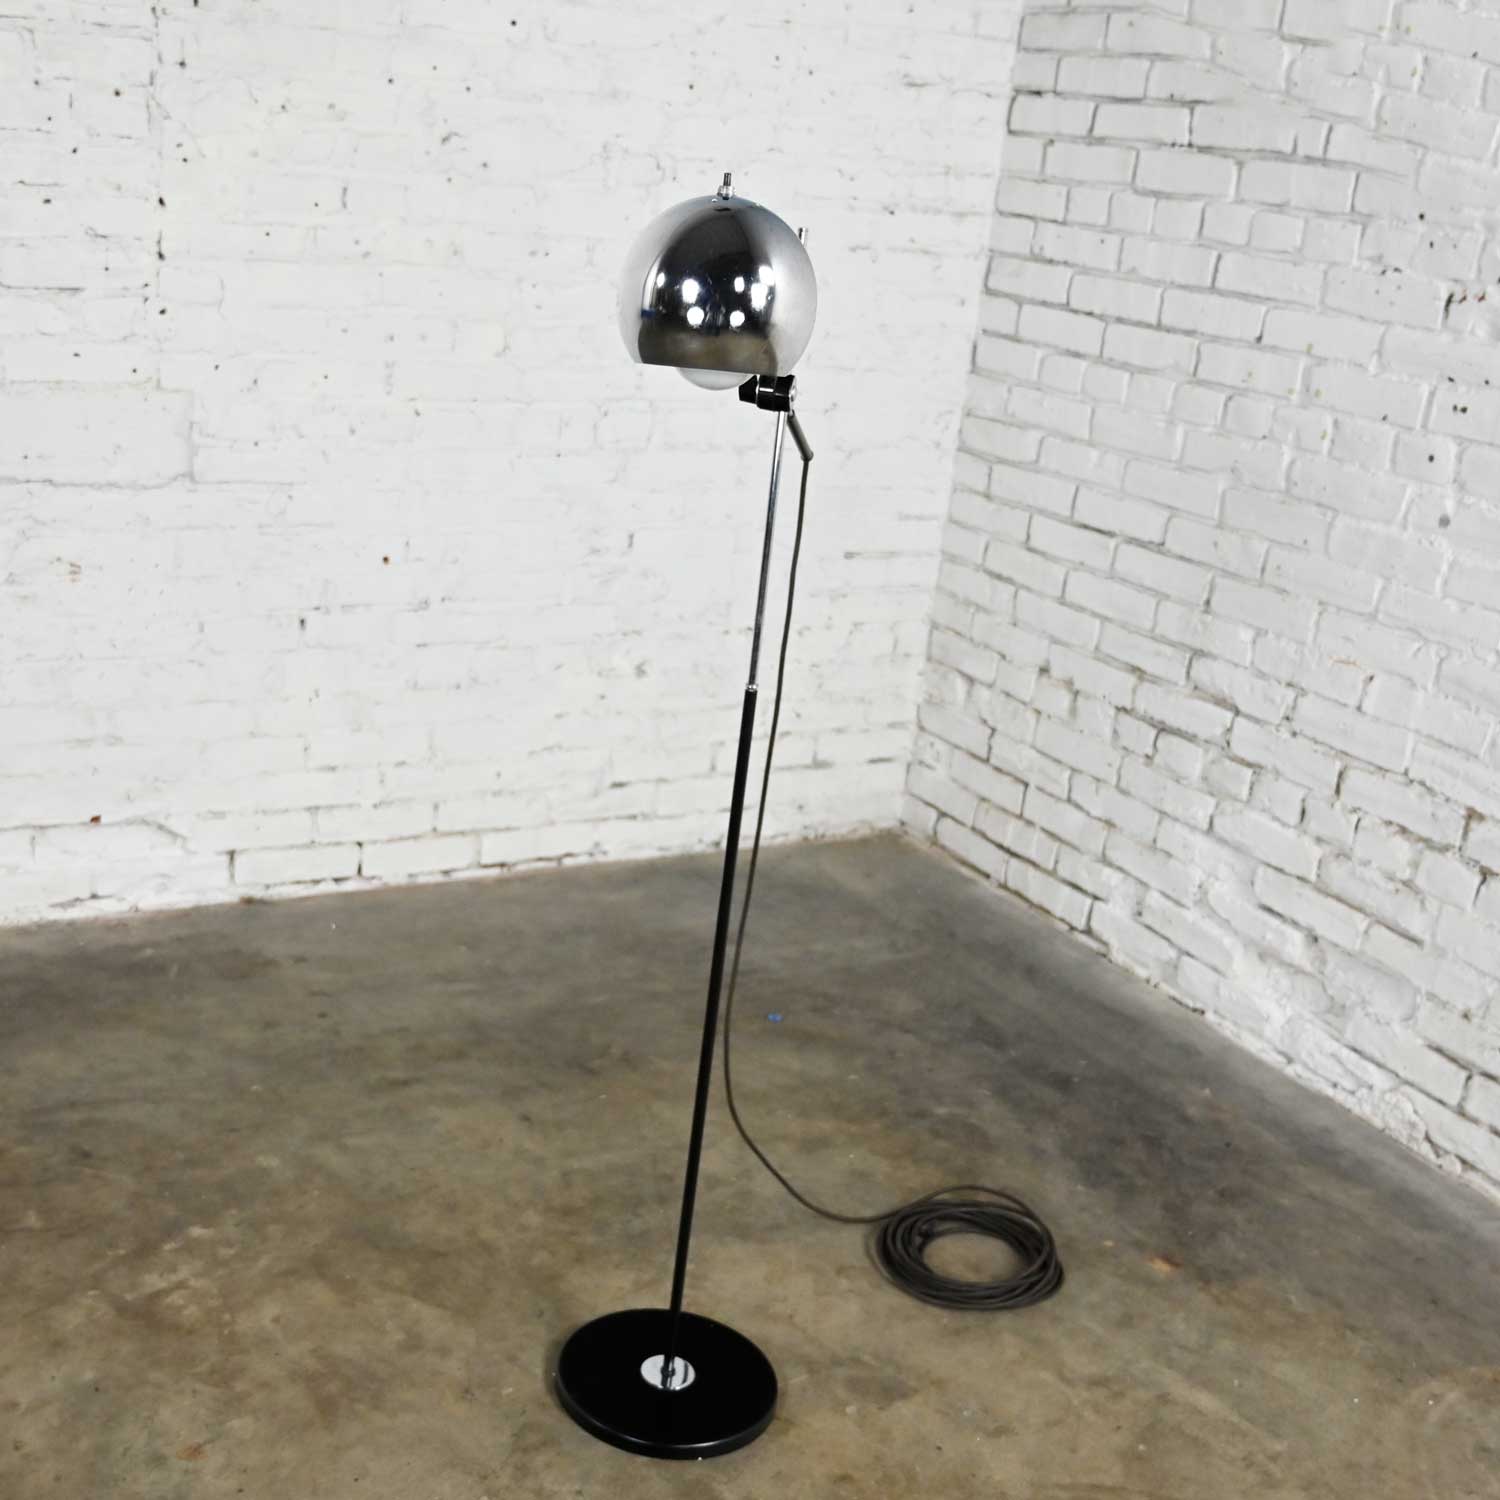 MCM Orbital Chrome Ball Adjustable Floor Lamp Attributed to the Eyeball Lamp by Robert Sonneman